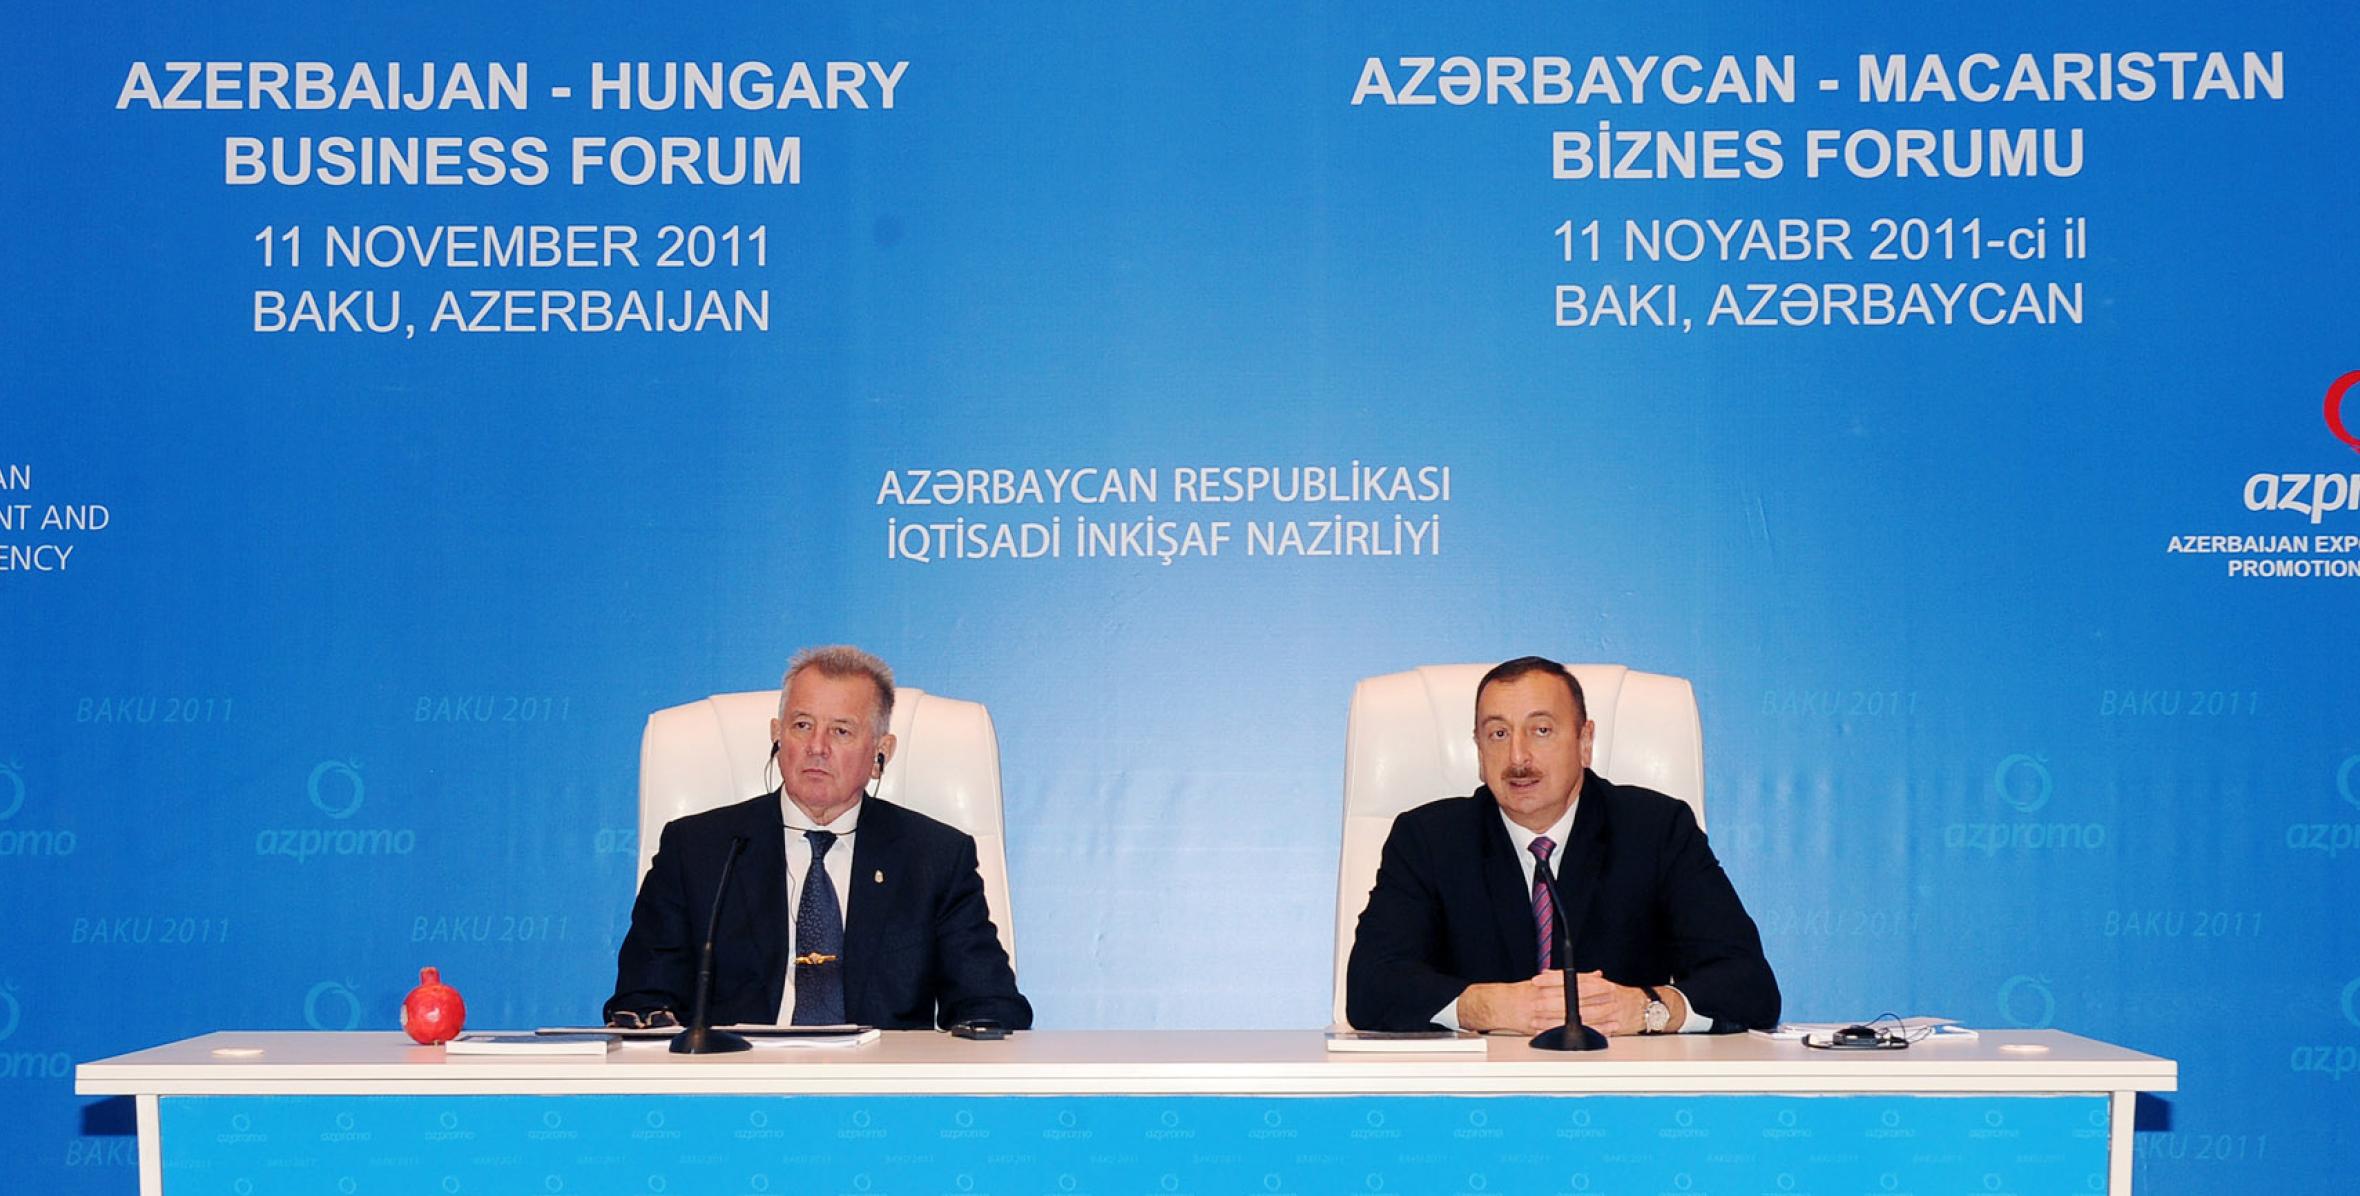 Speech by Ilham Aliyev at the Azerbaijani-Hungarian business forum